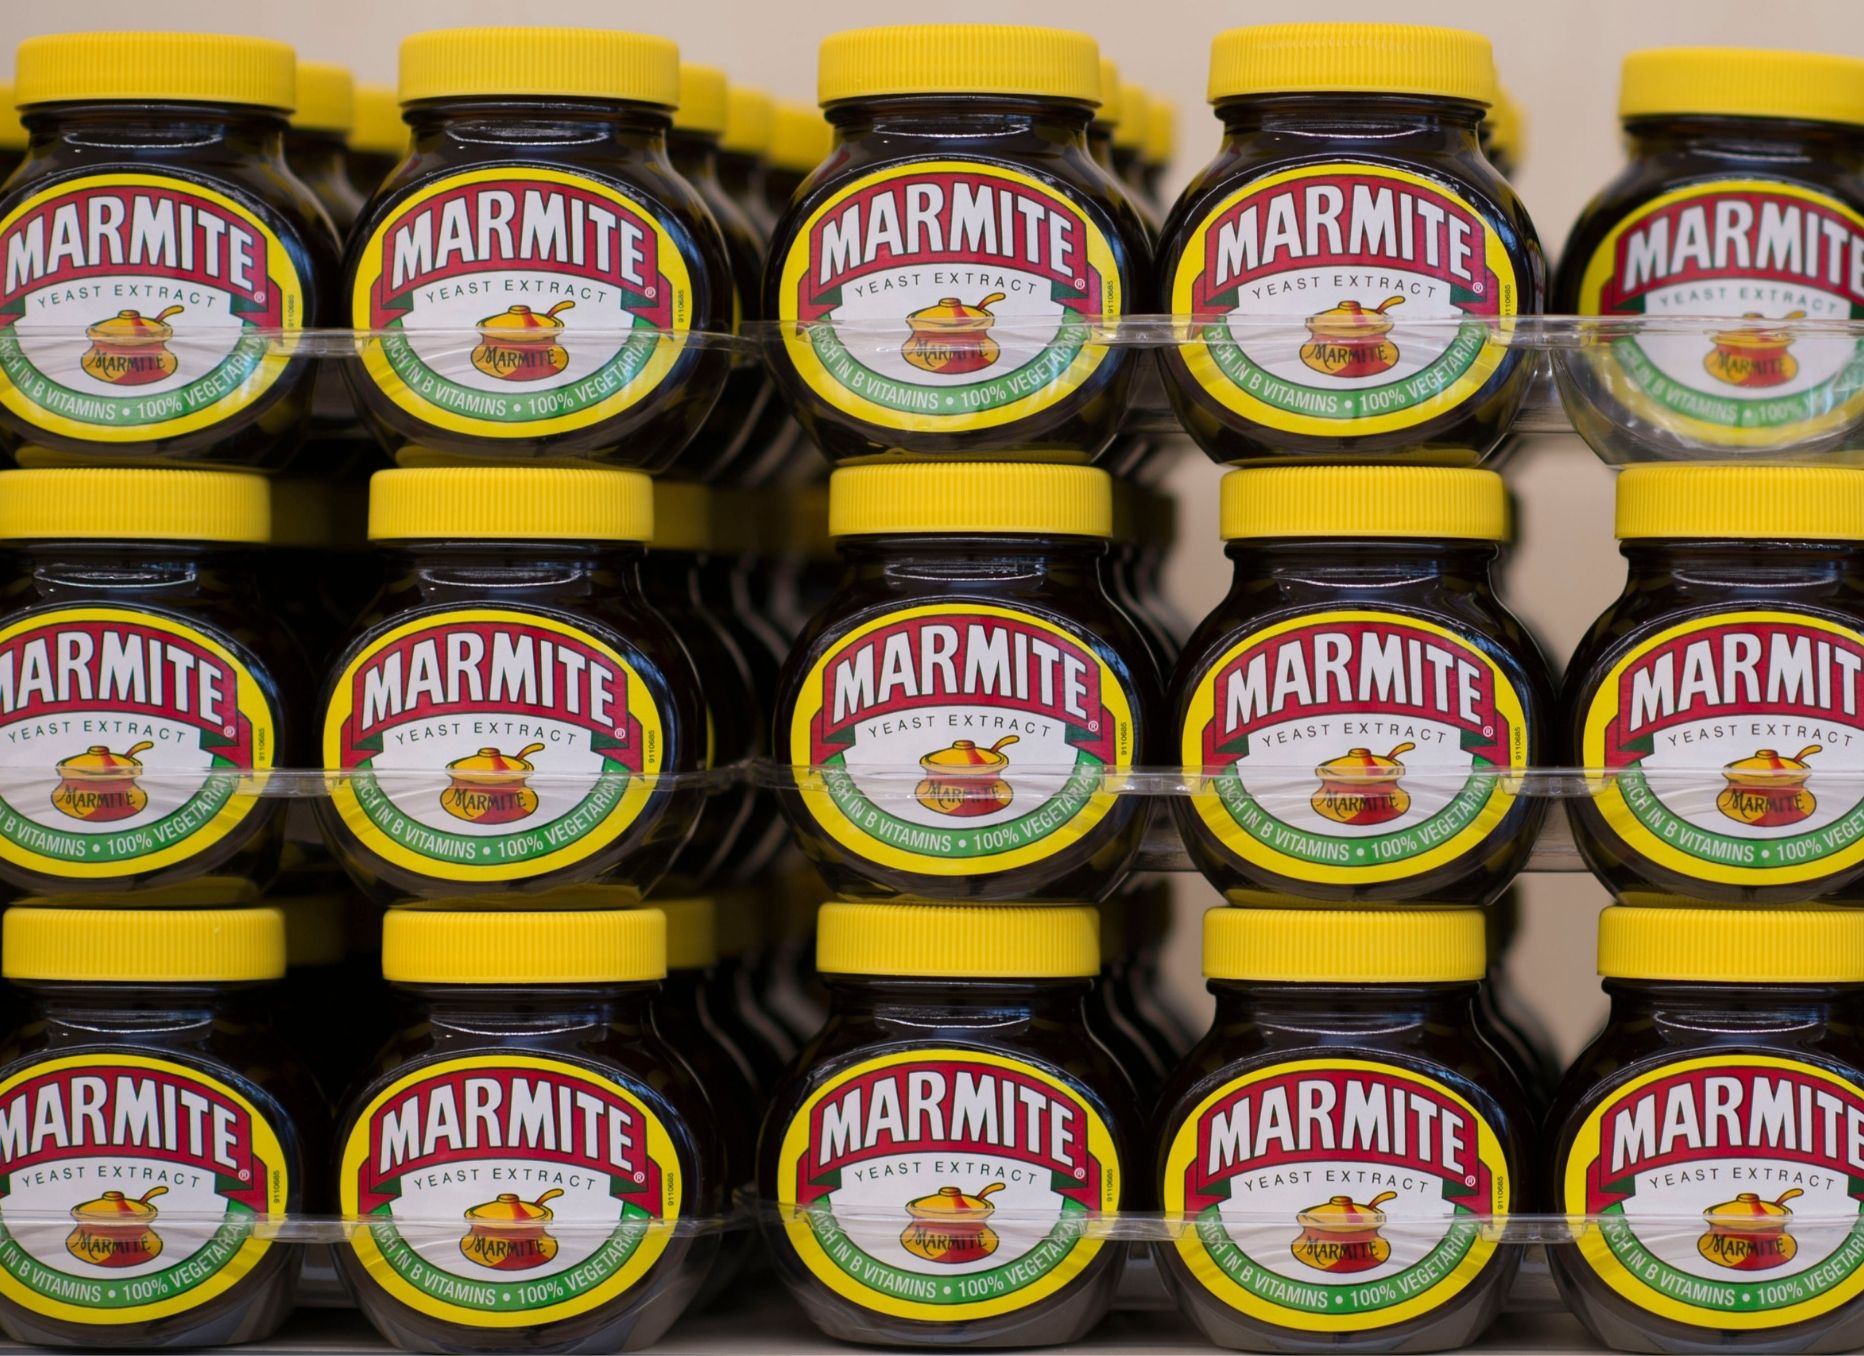 Marmite, but I will